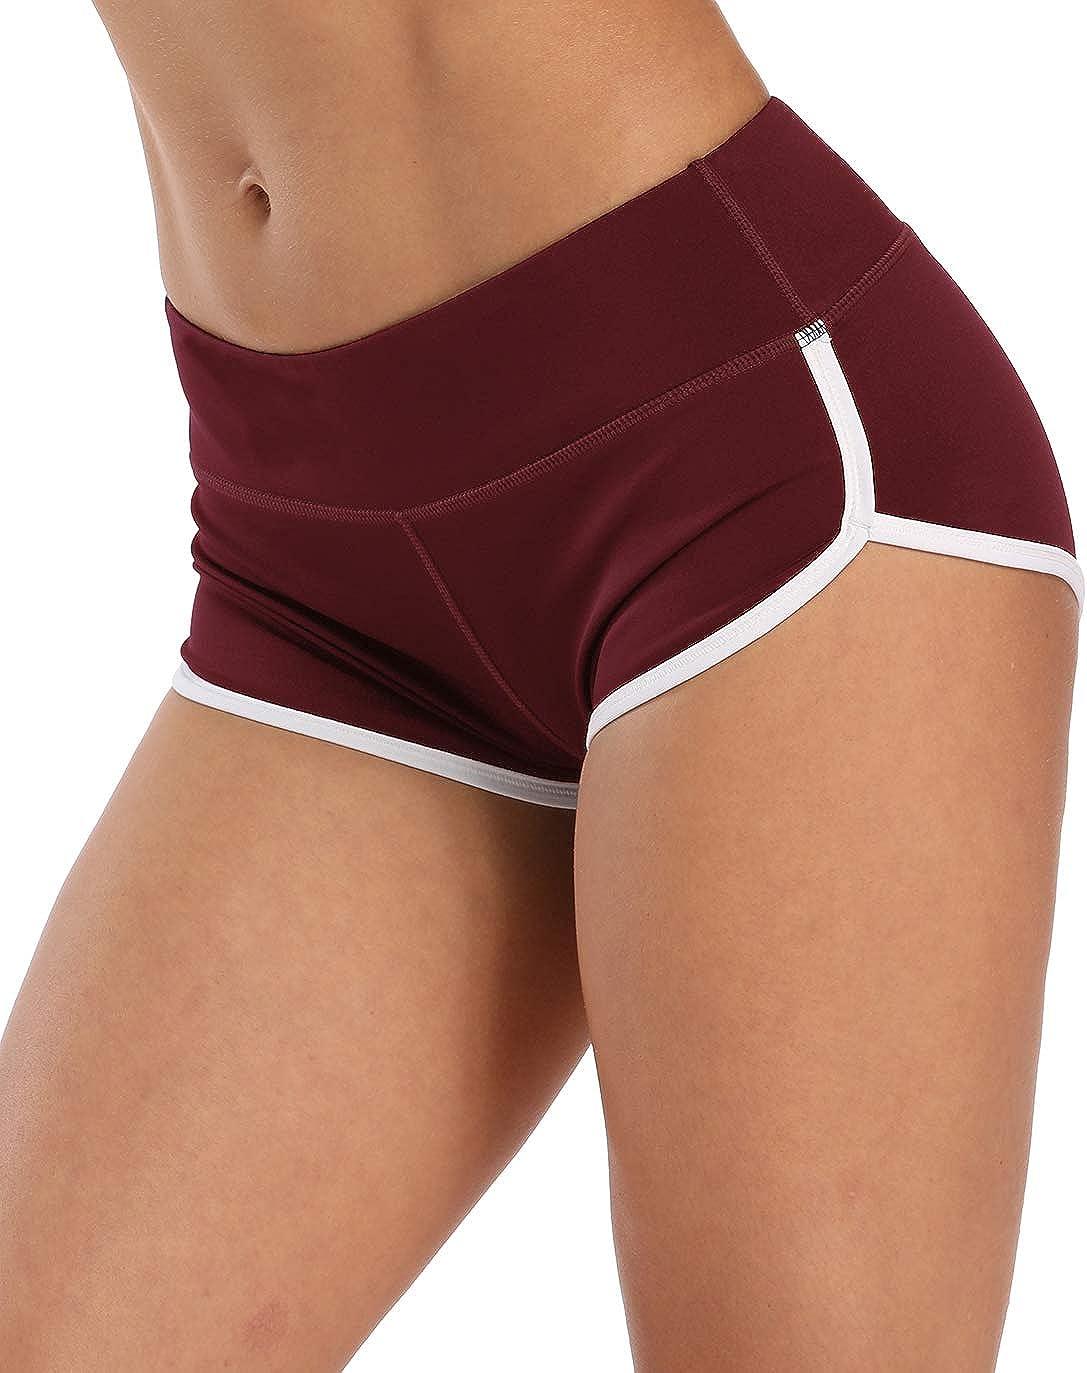 ENEESSI Women's Booty Shorts Workout Butt Lifting High Waist Yoga Running Gym  Shorts Wine Red/White XX-Large Short